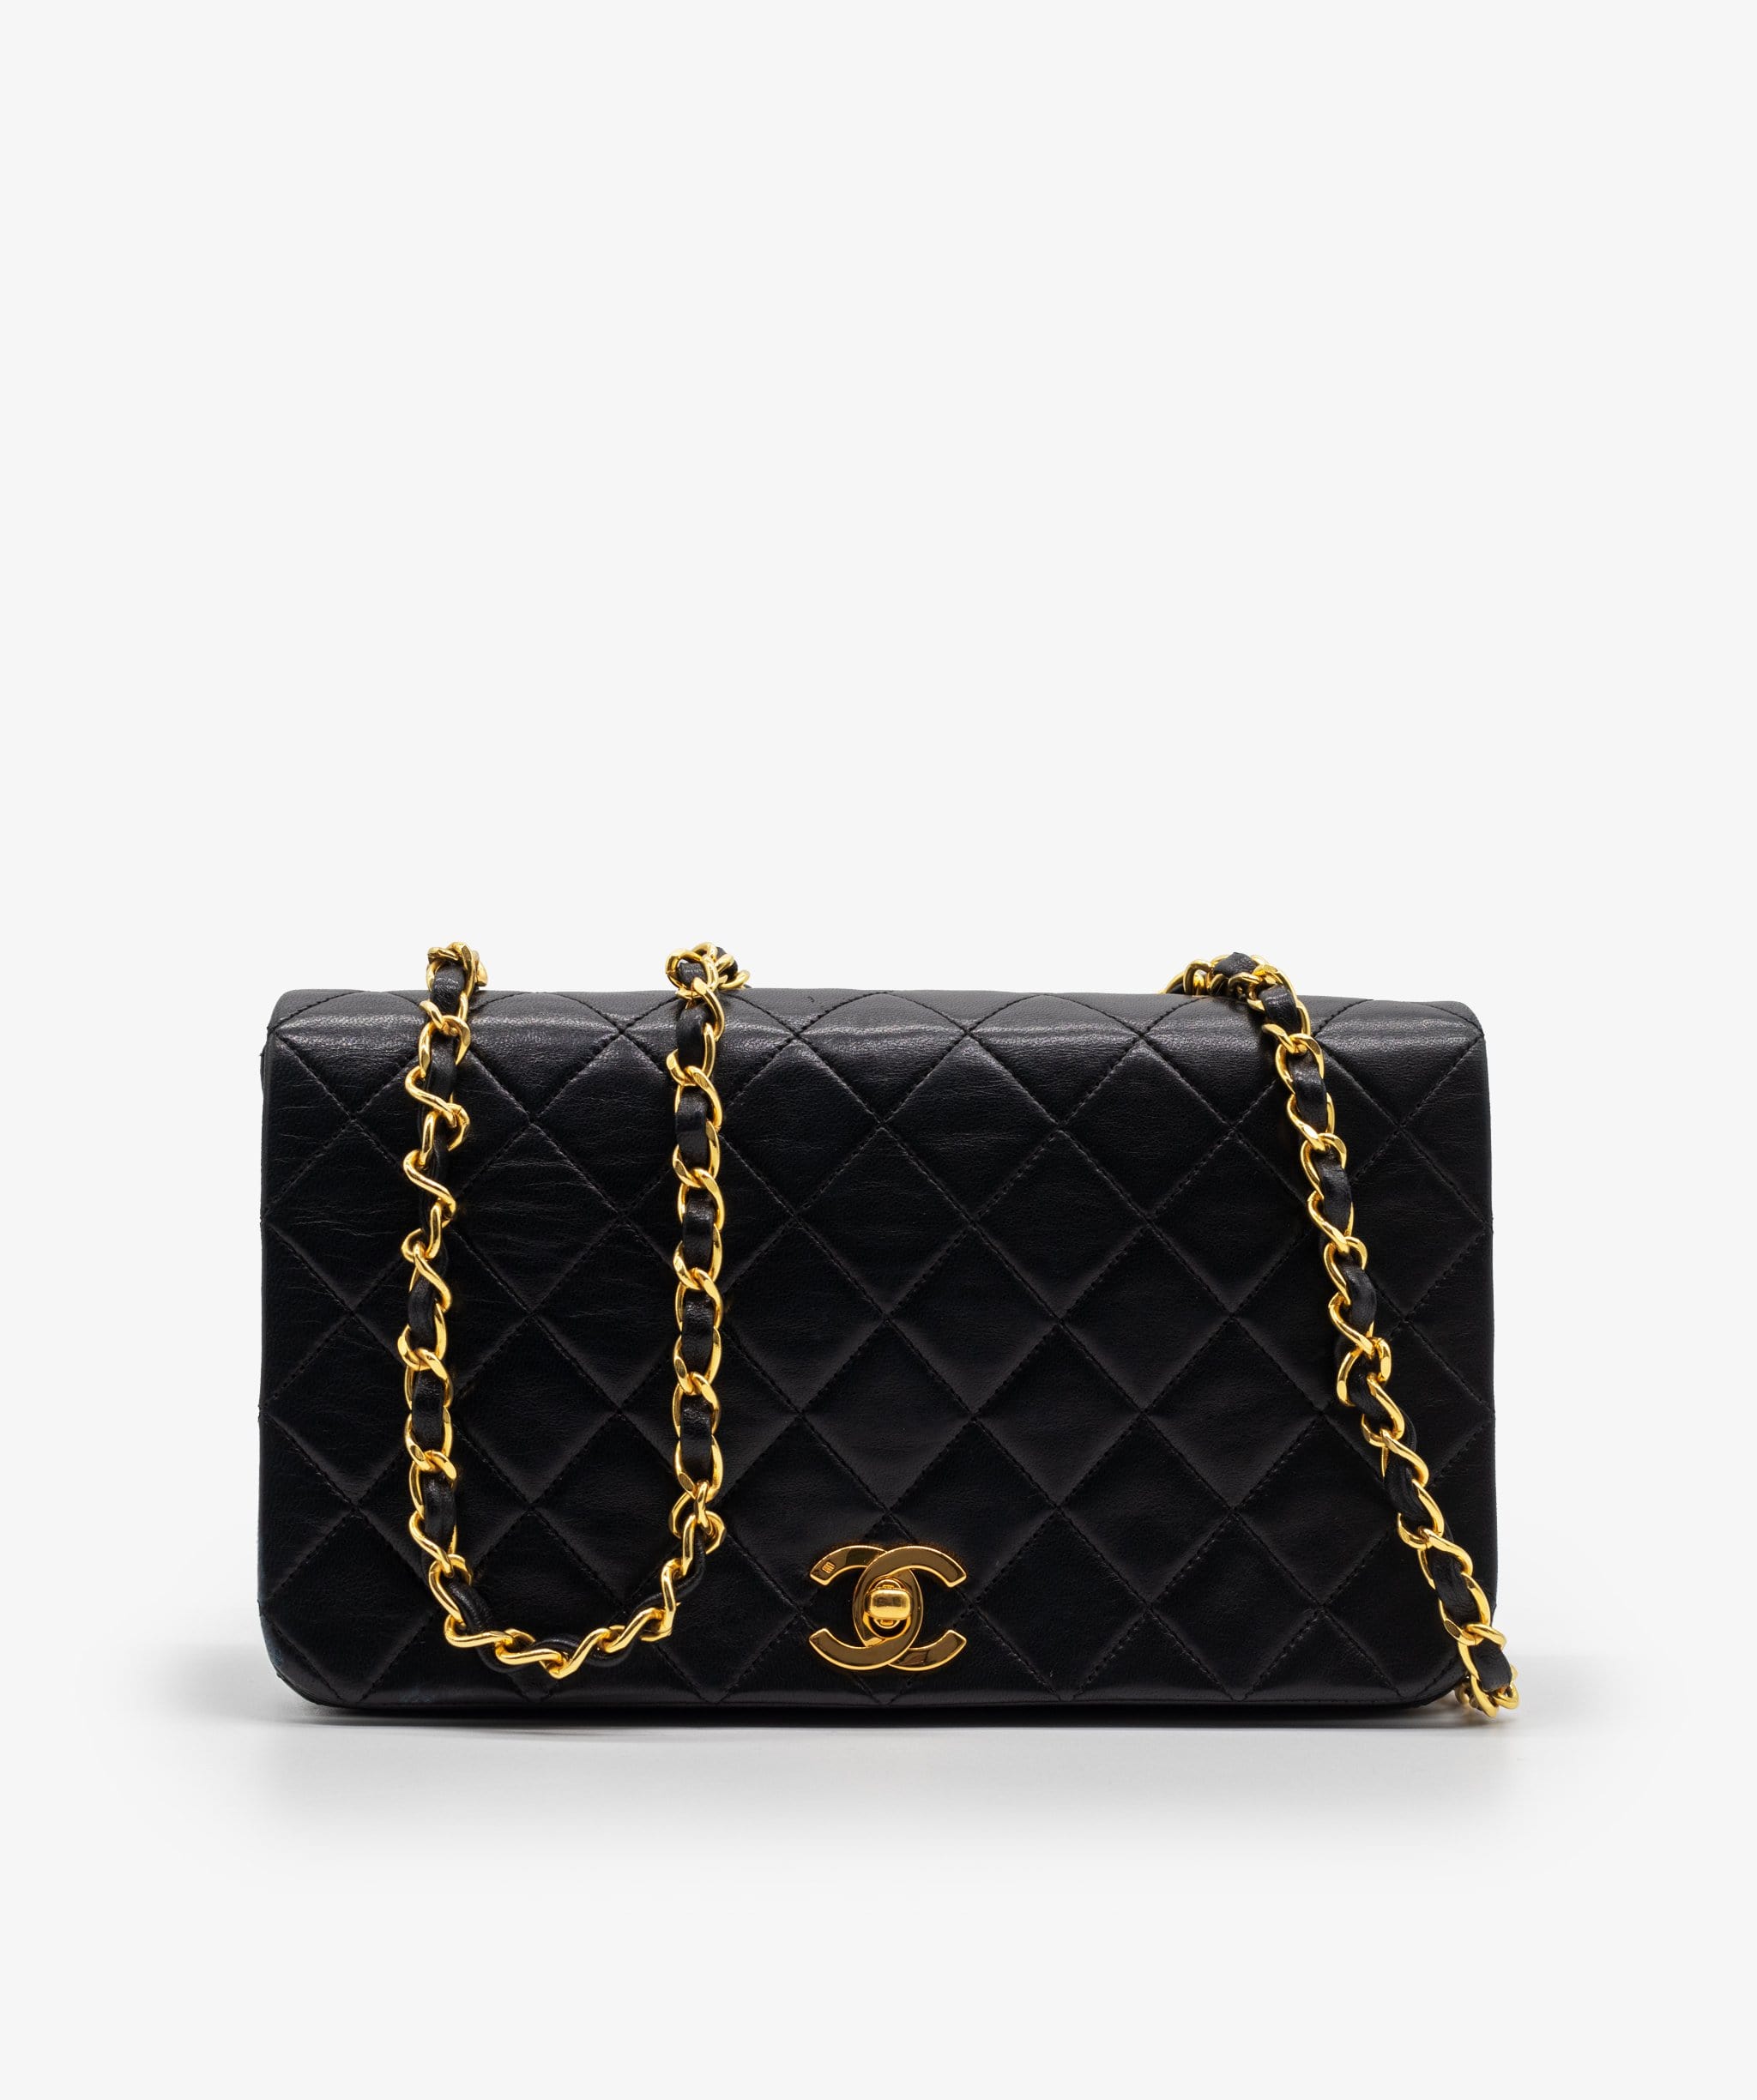 Chanel Chanel Small Matelasse Flap Bag RCL1005